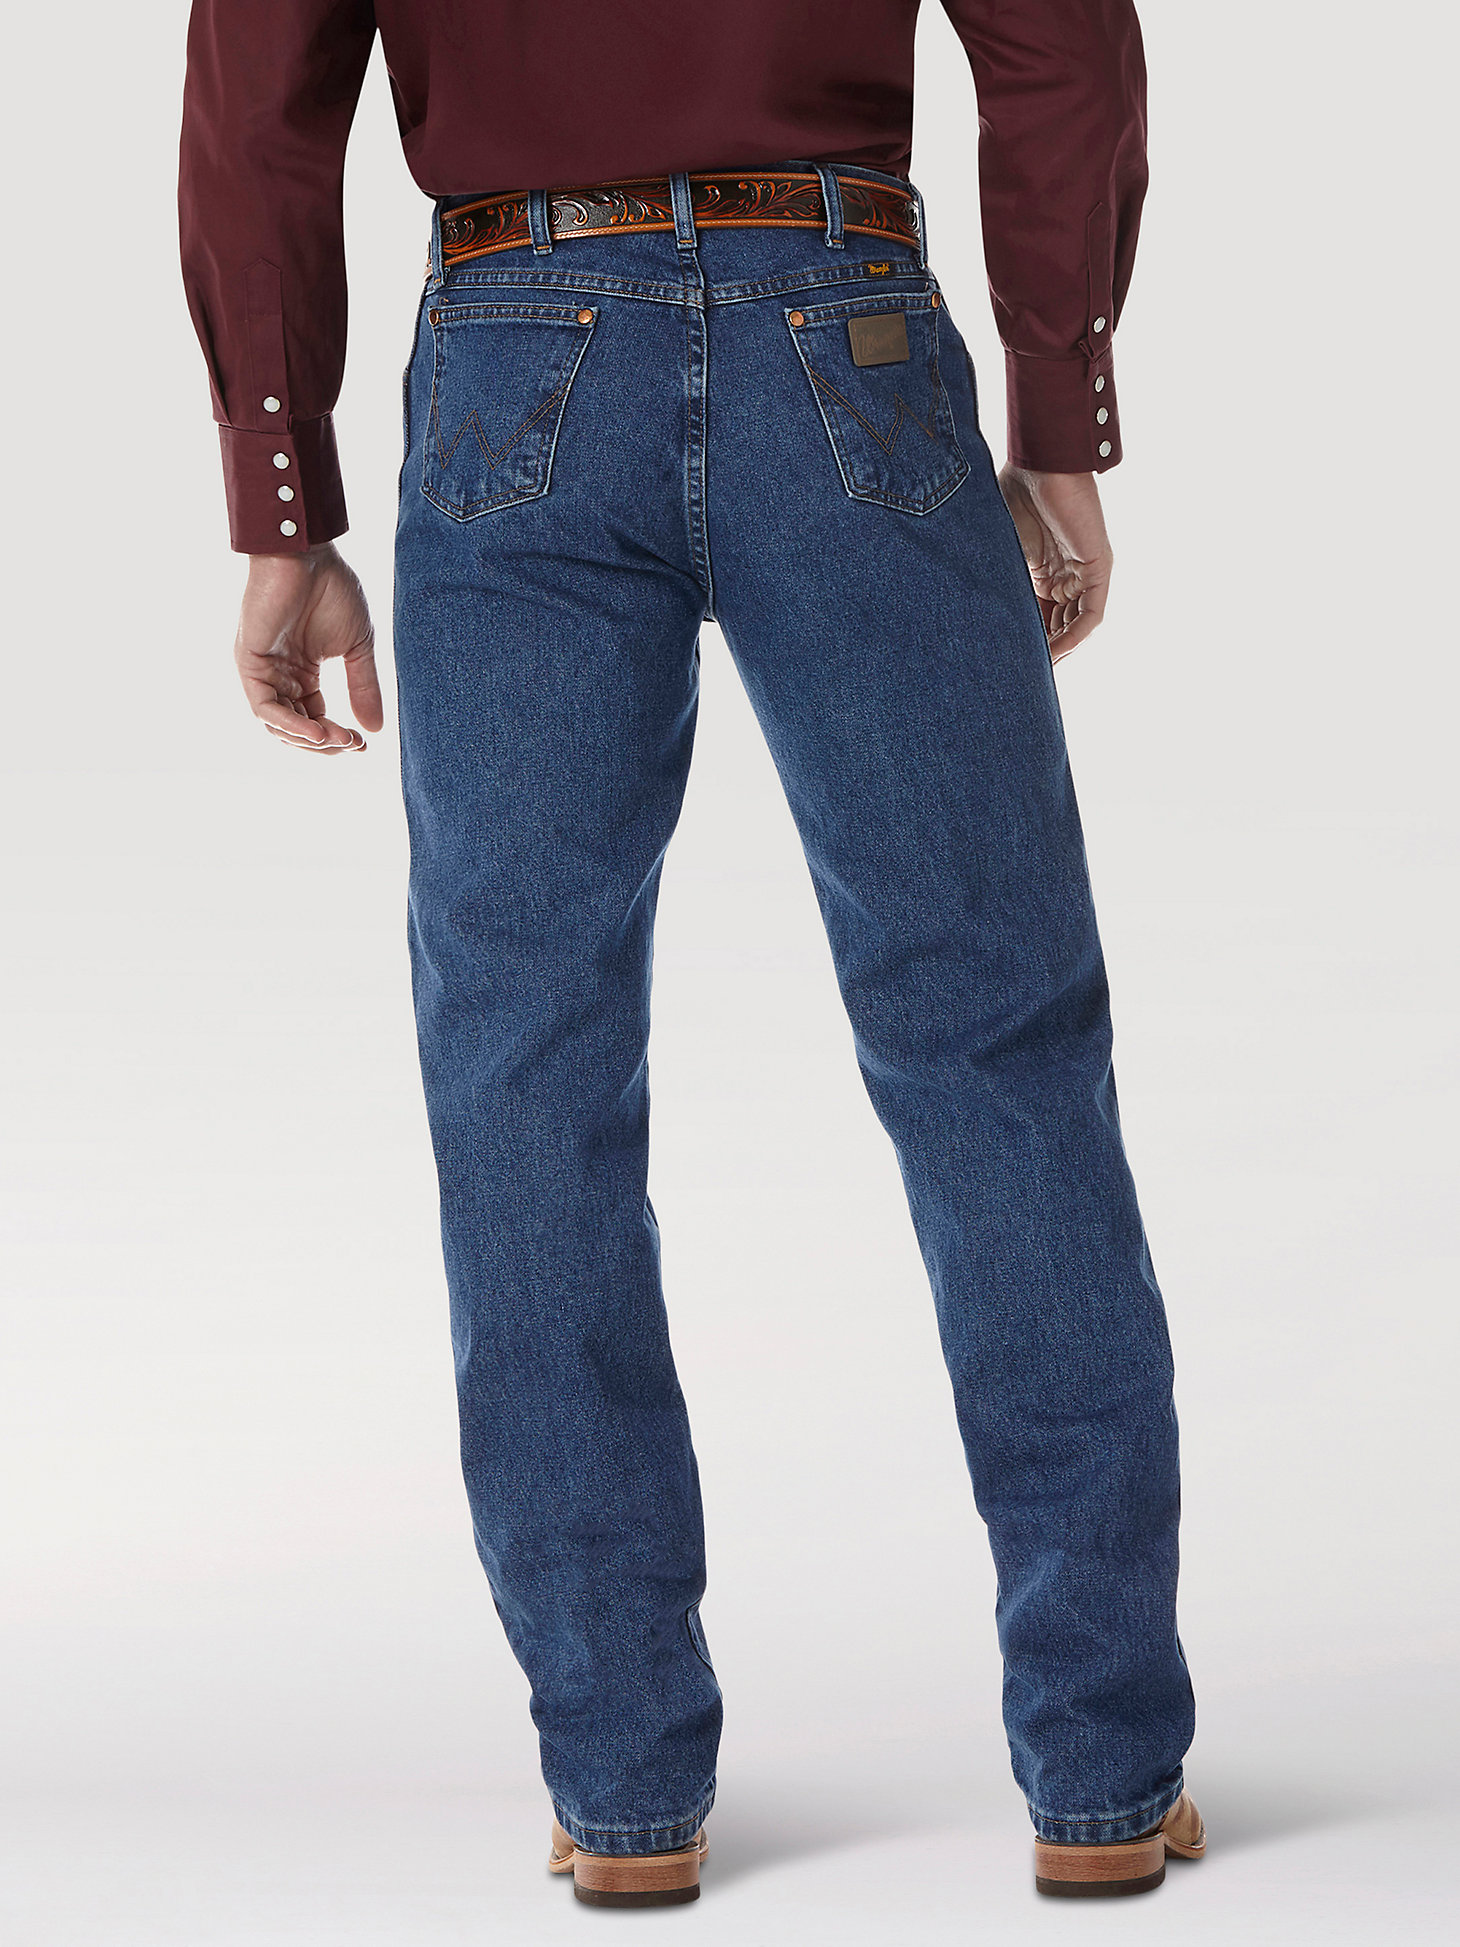 Wrangler® Cowboy Cut® Original Fit Jean in Stonewashed alternative view 1